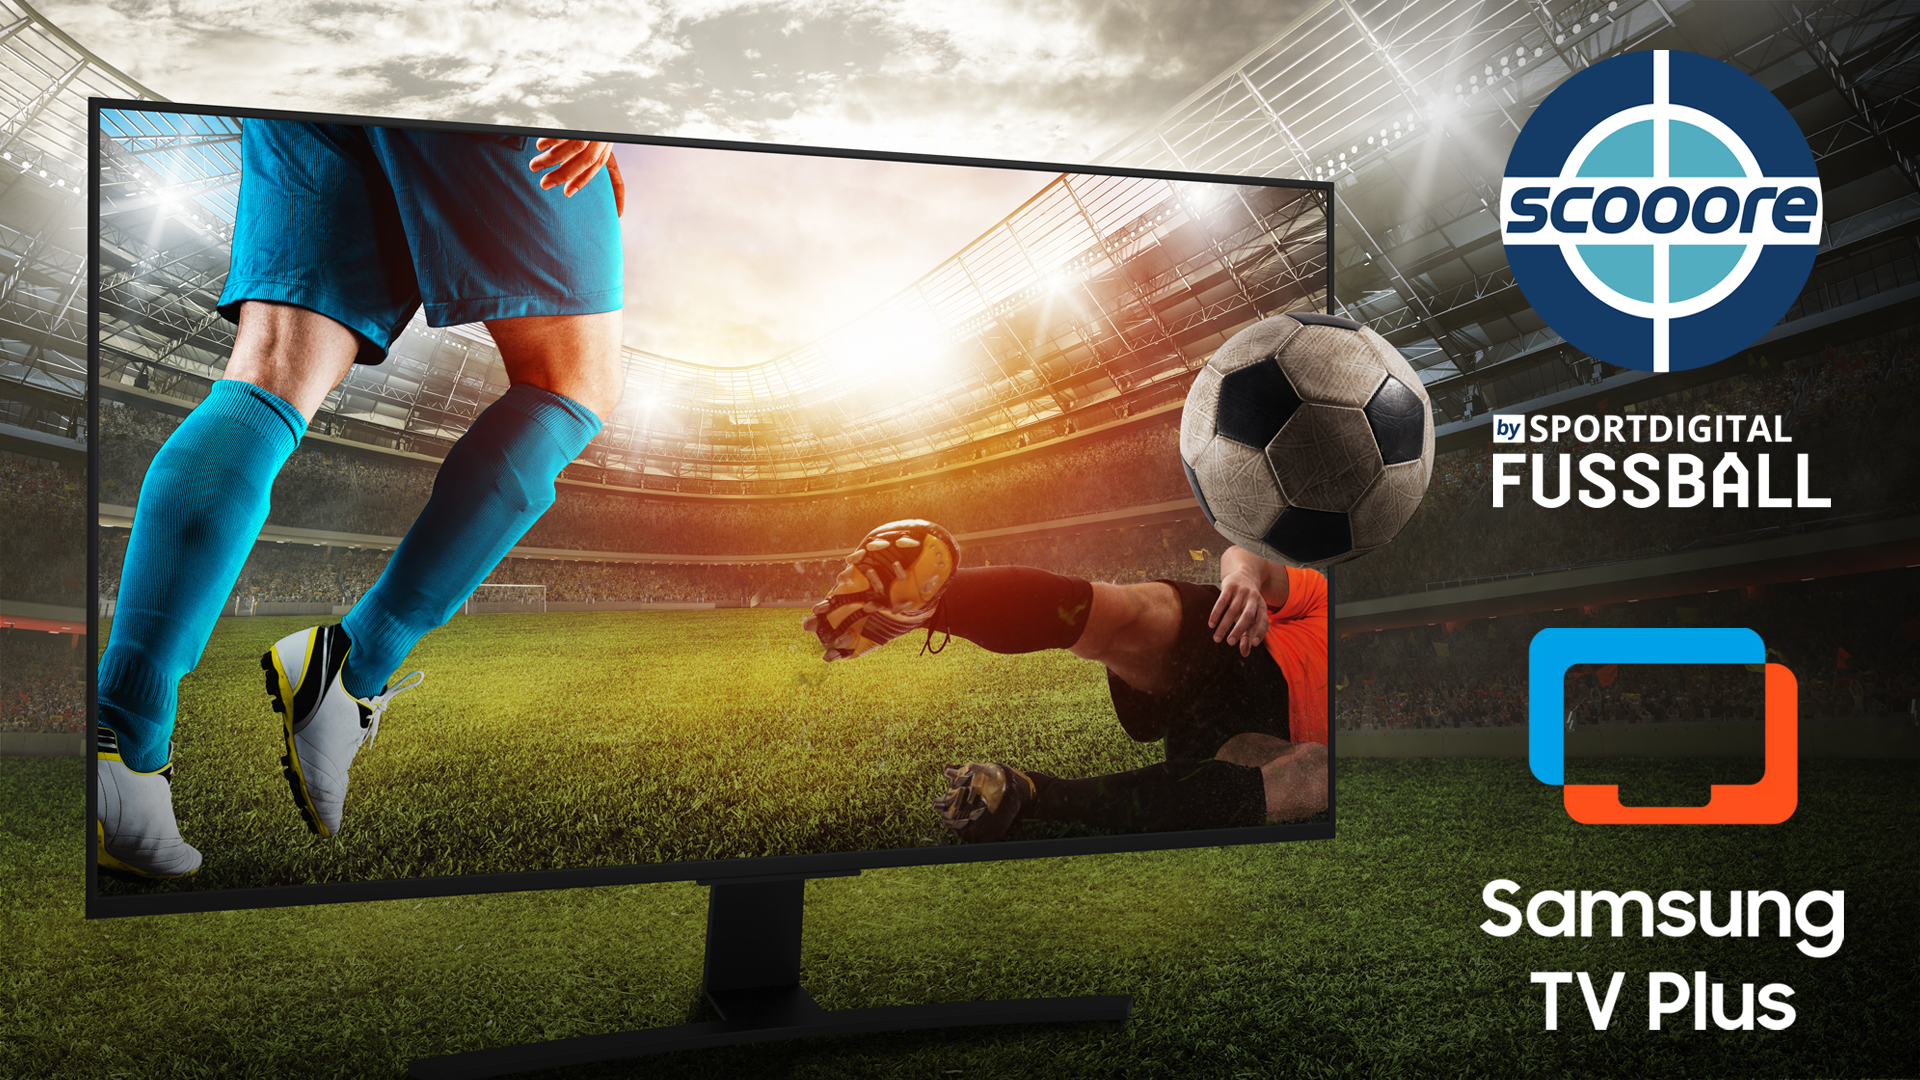 Sportdigital FUSSBALL launcht FAST Channel “Scooore” auf Samsung TV Plus